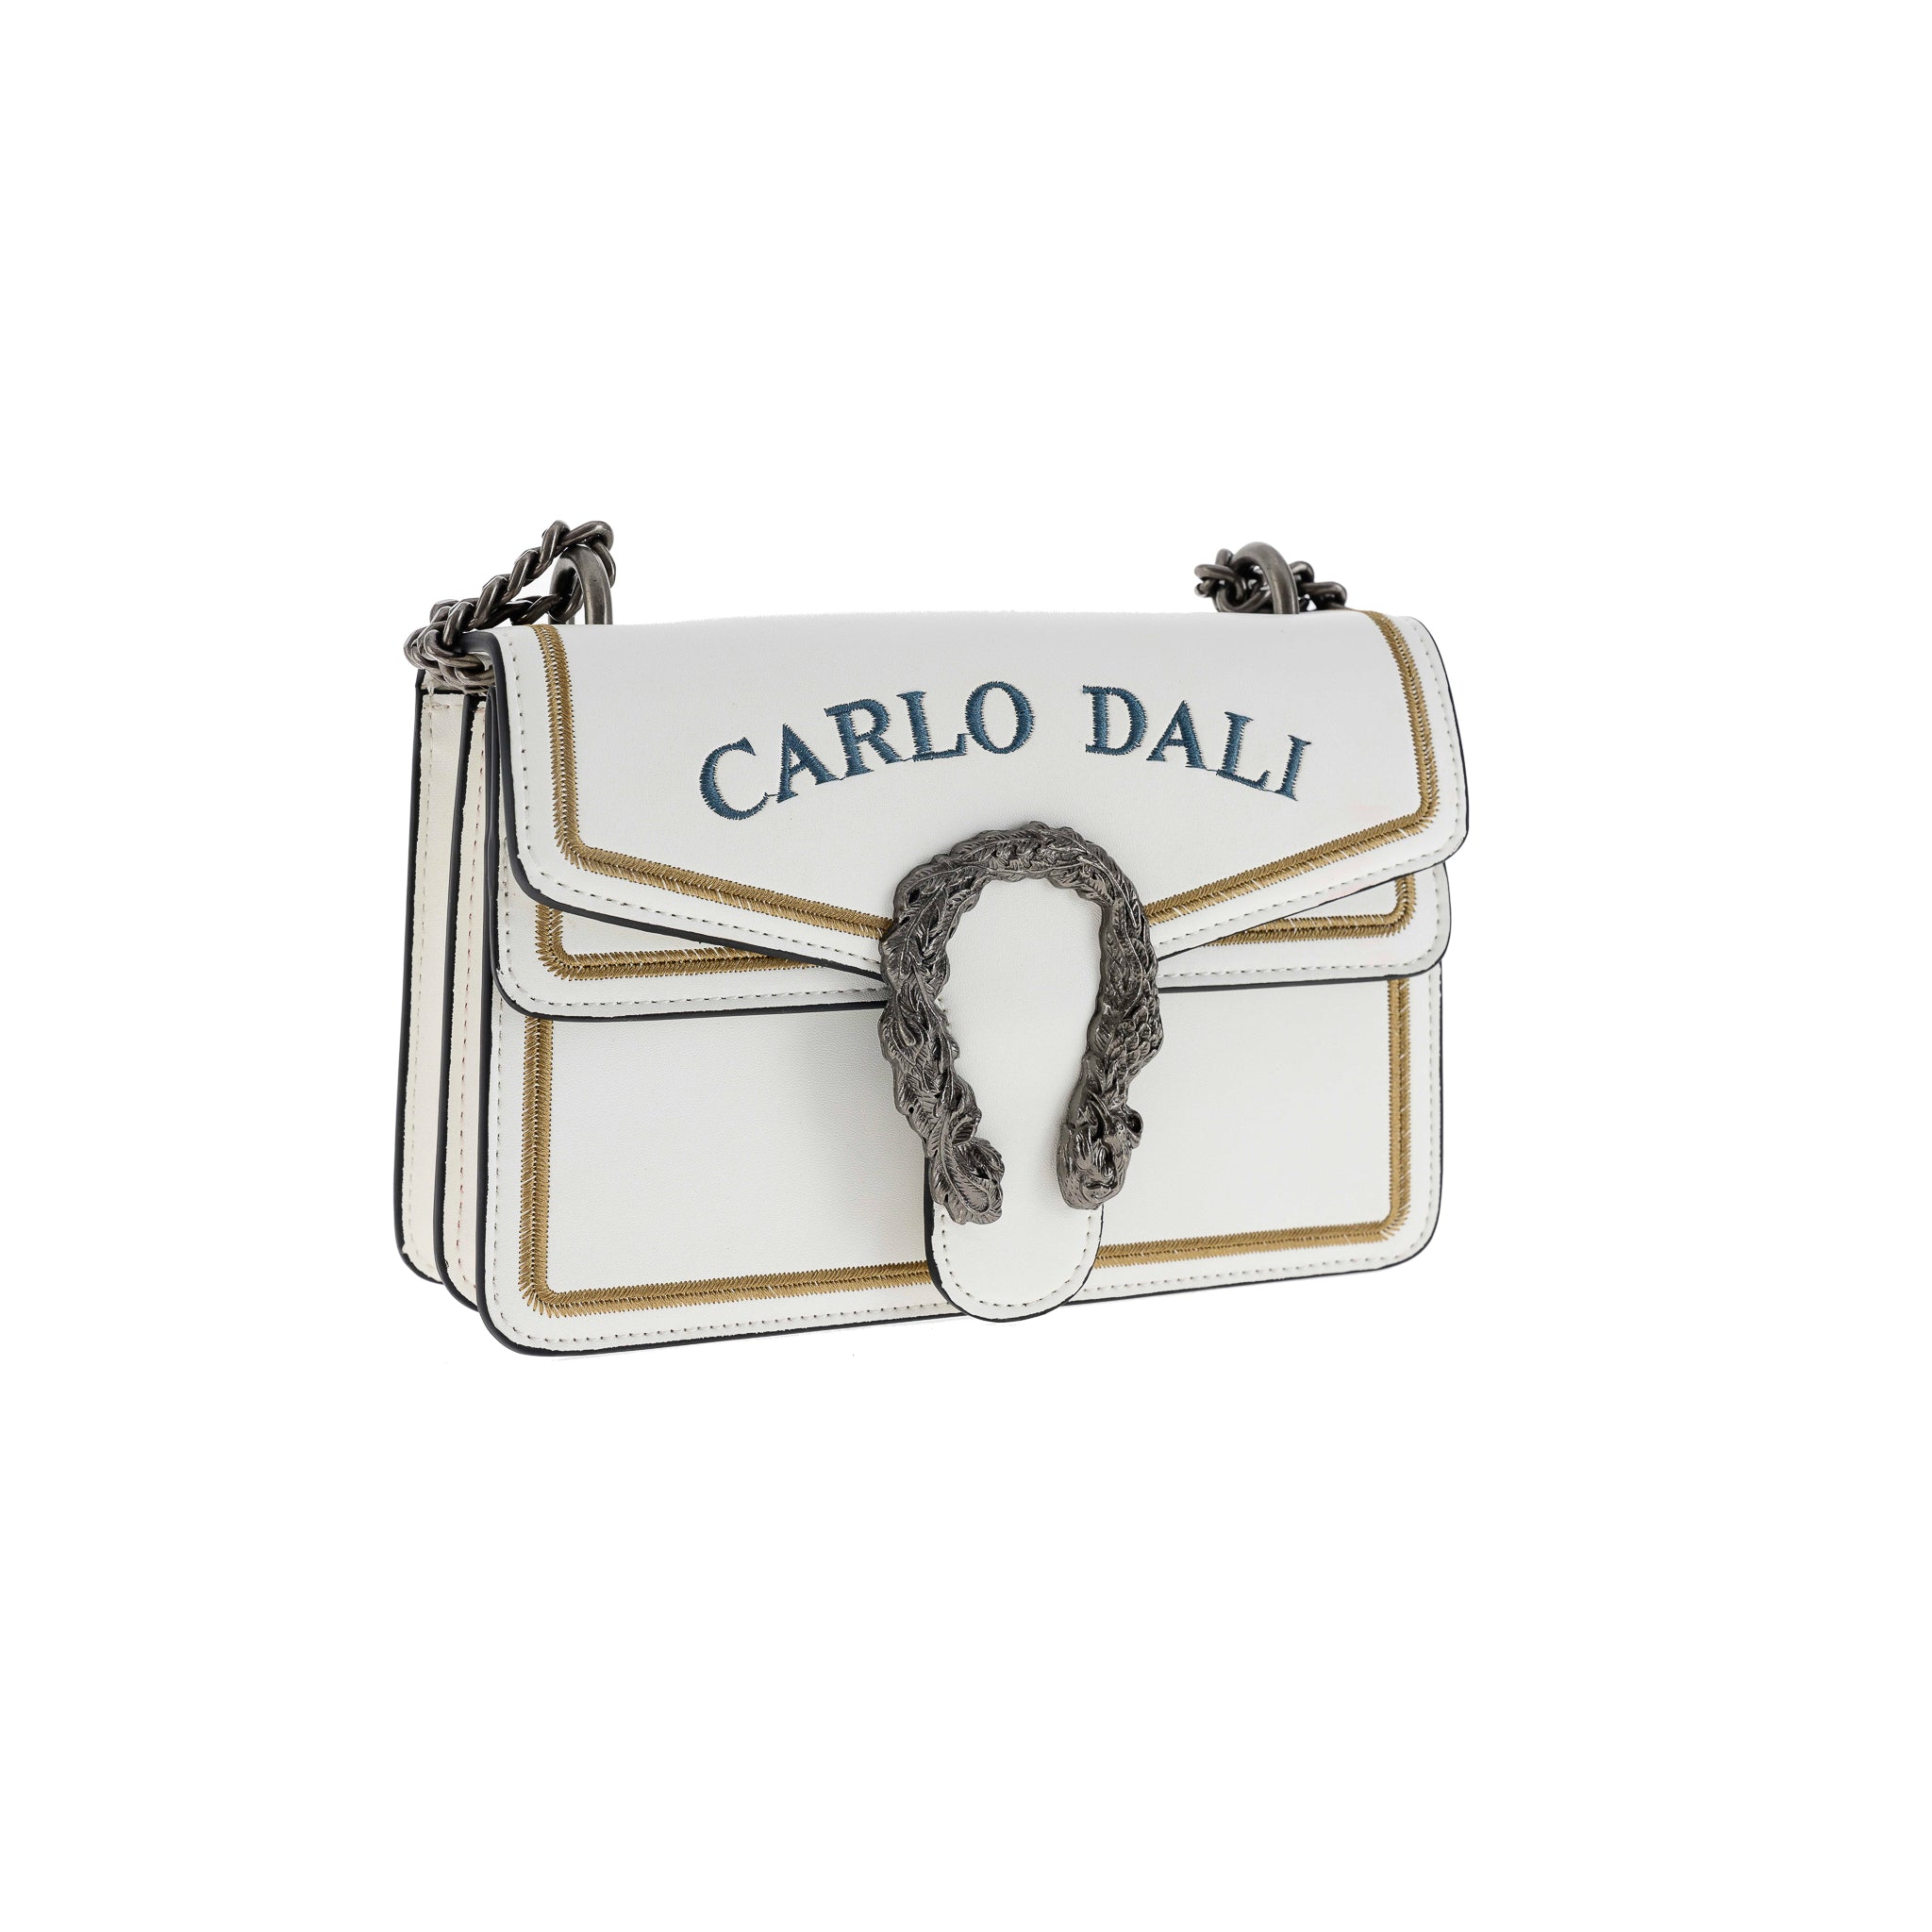 CARLO DALI Baby Rose Shoulder Bag